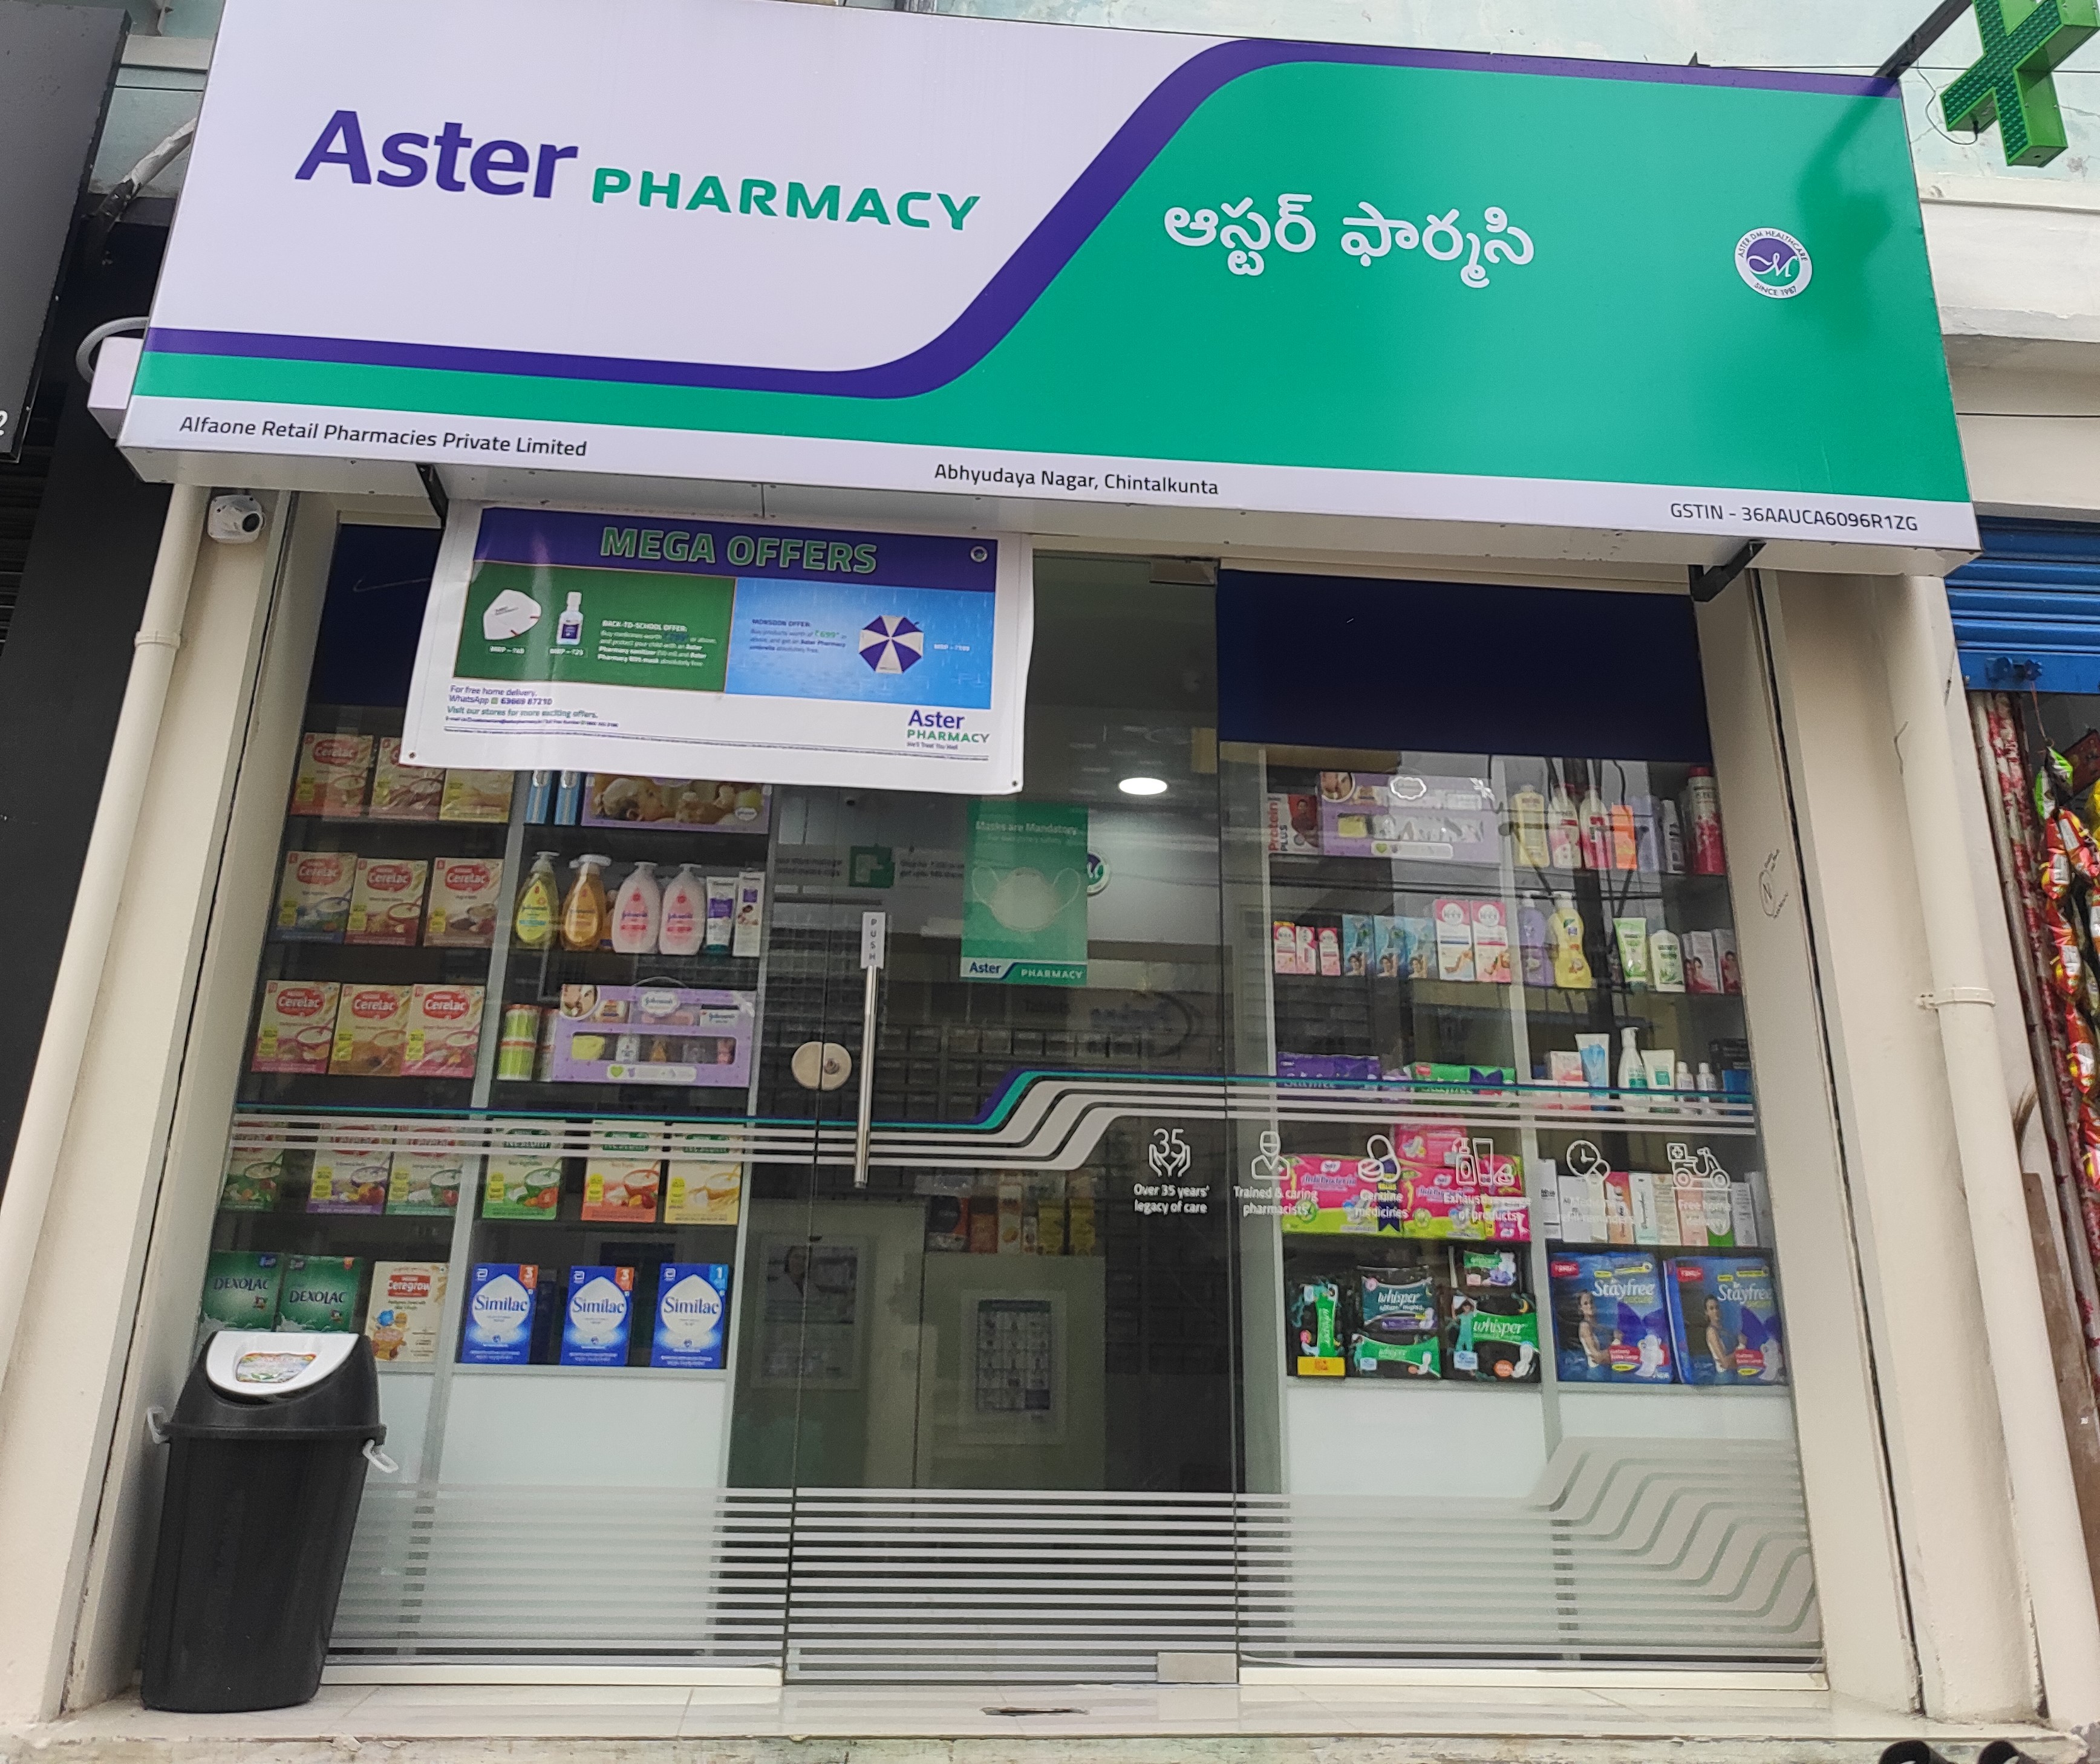 Aster Pharmacy in Chintalkunta, Hyderabad